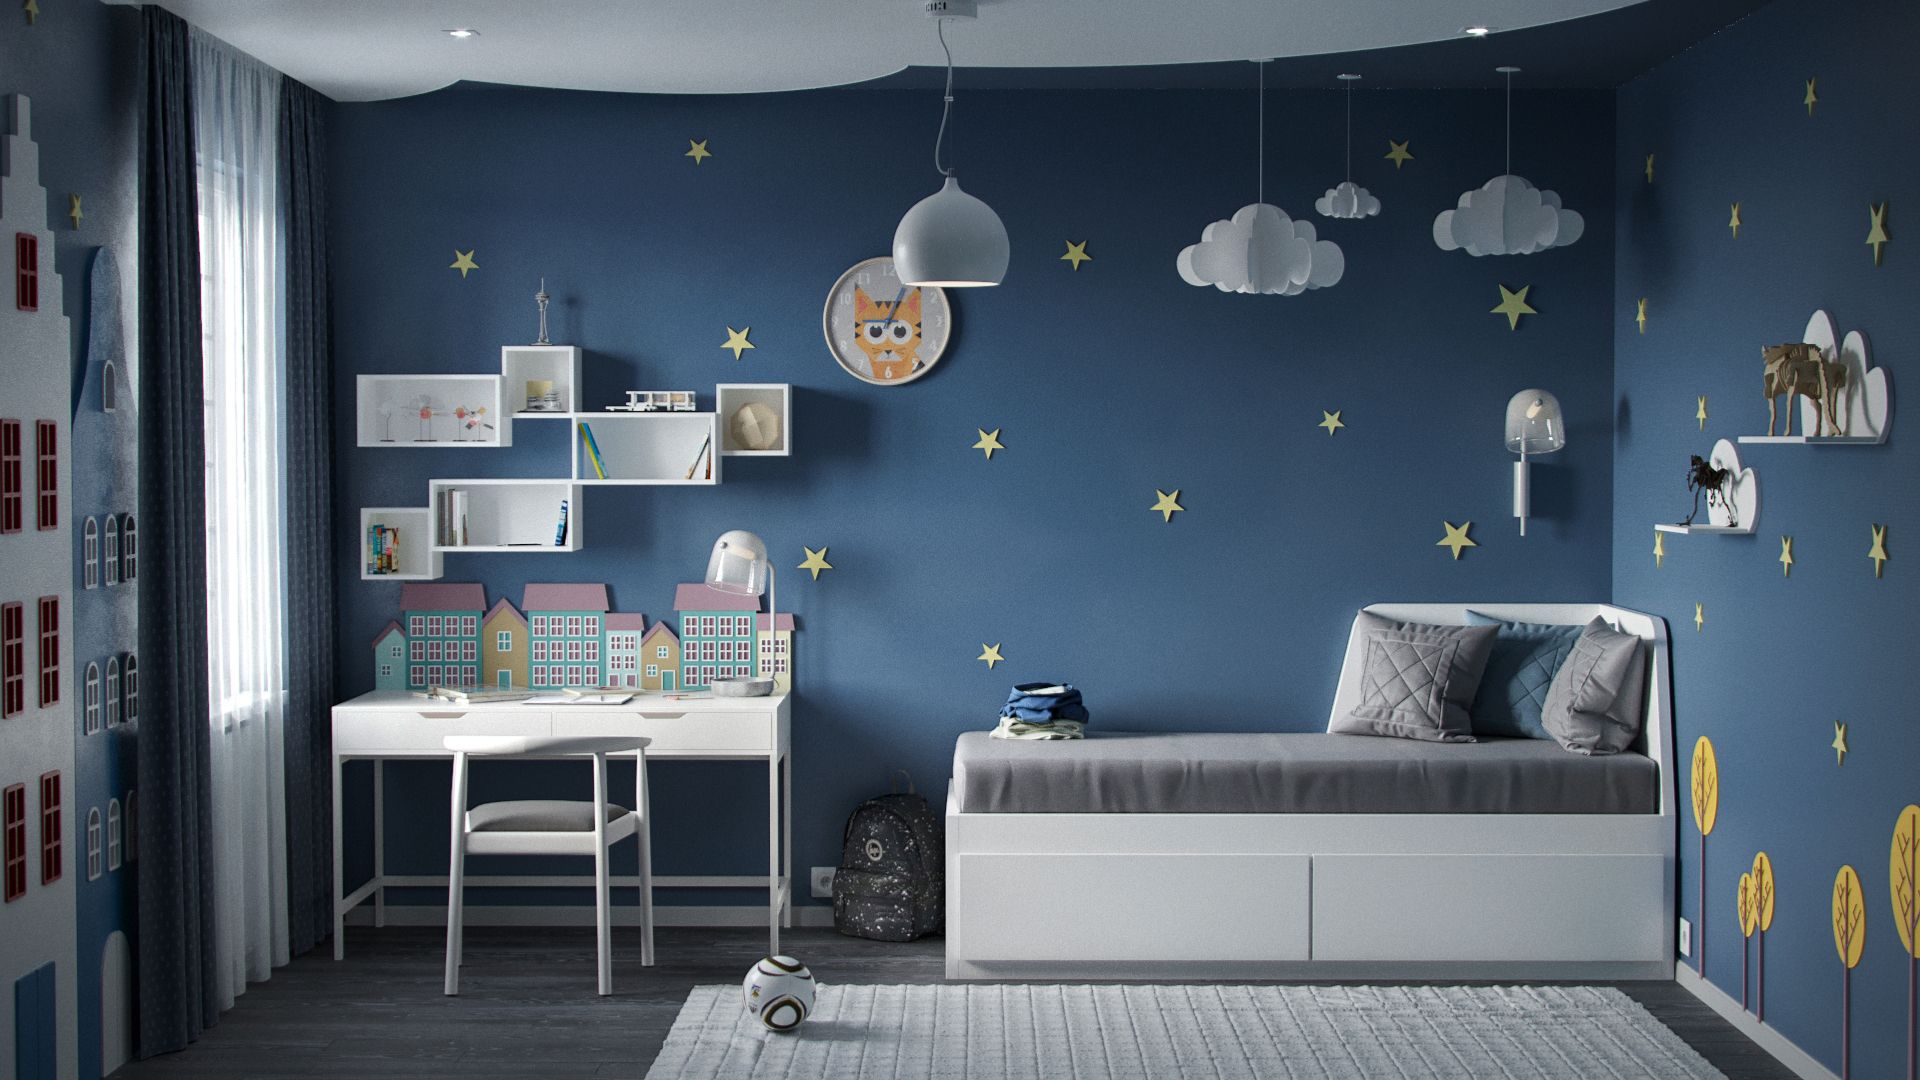 13 Kids’ Room Wallpaper Inspiration Ideas